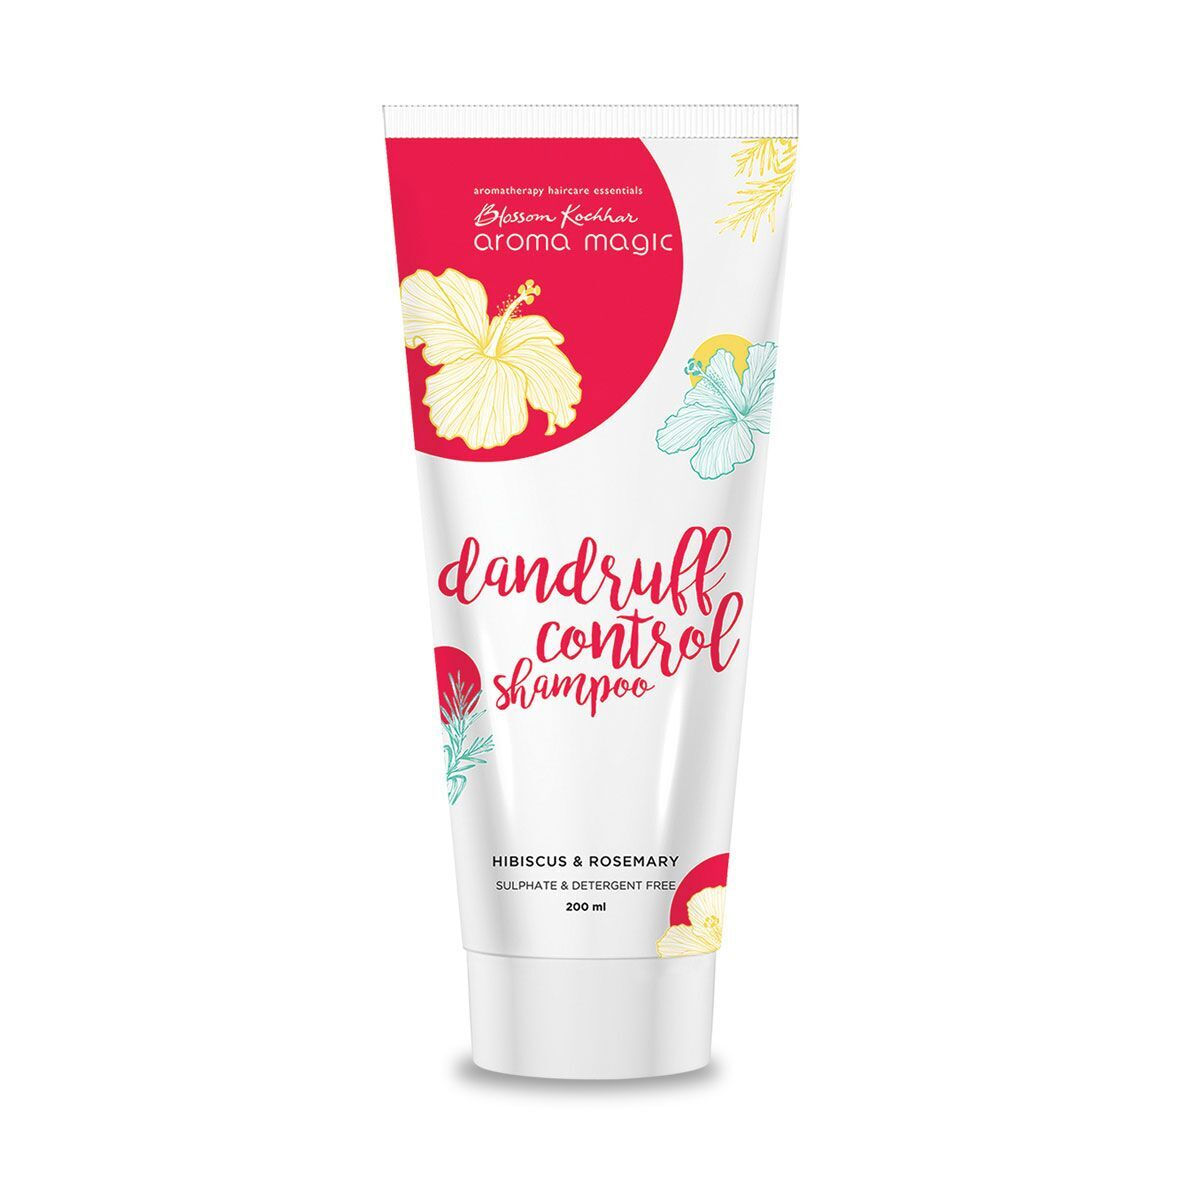 Aroma Magic Dandruff Control Shampoo Hibiscus & Rosemary Sulphate & Detergent Free